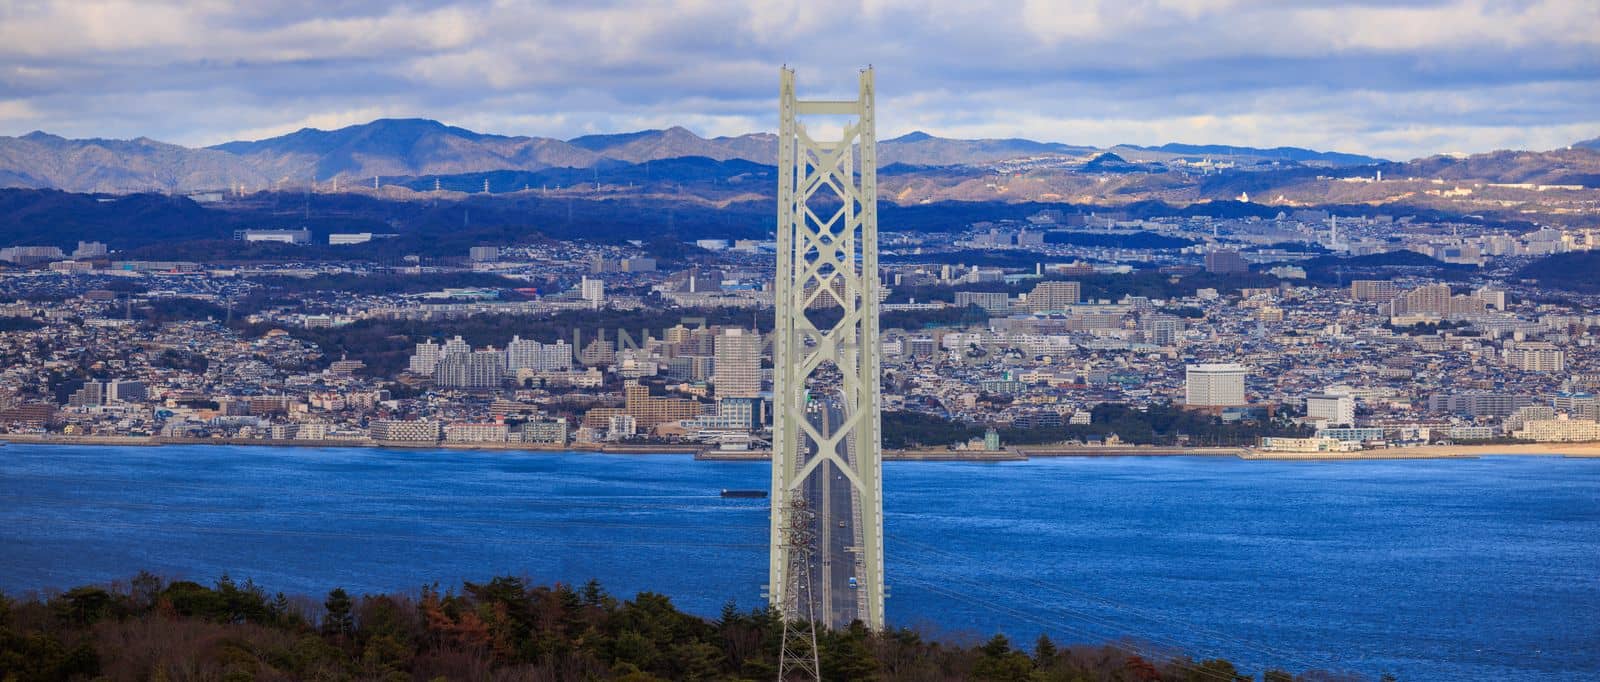 Panoramic view of Akashi Kaikyo Bridge, the longest suspension bridge in the world. High quality photo